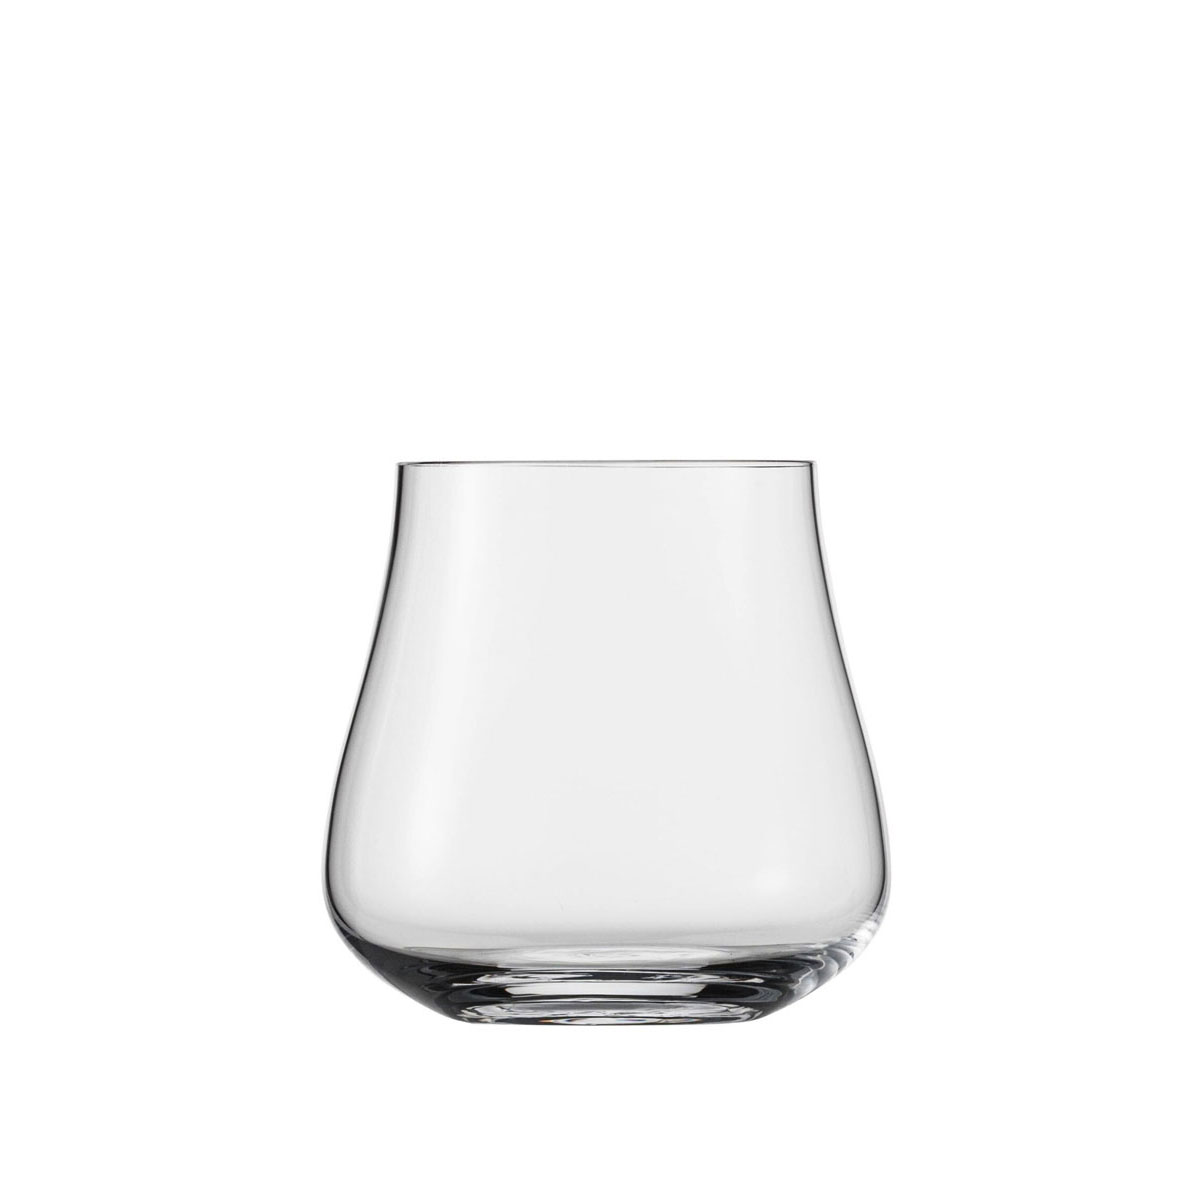 Schott Zwiesel Tritan Crystal, Concerto Life Cocktail Glass, Single